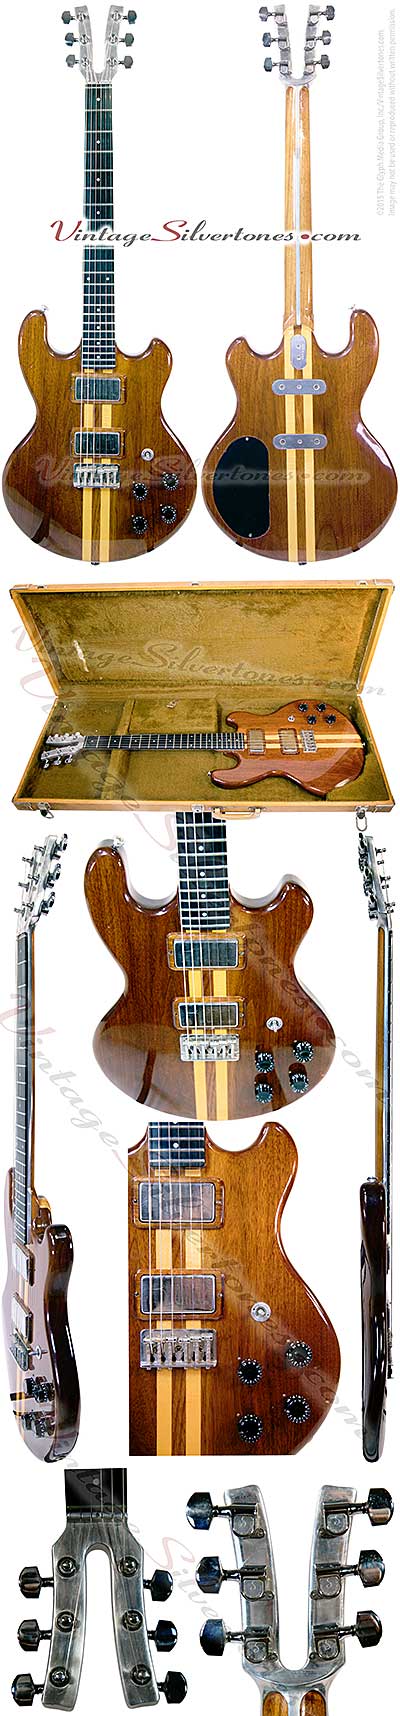 Kramer 450g-Neptune, NJ 2 pickup, electric guitar, 1978, natural finish, walnut and maple body, double cutaway